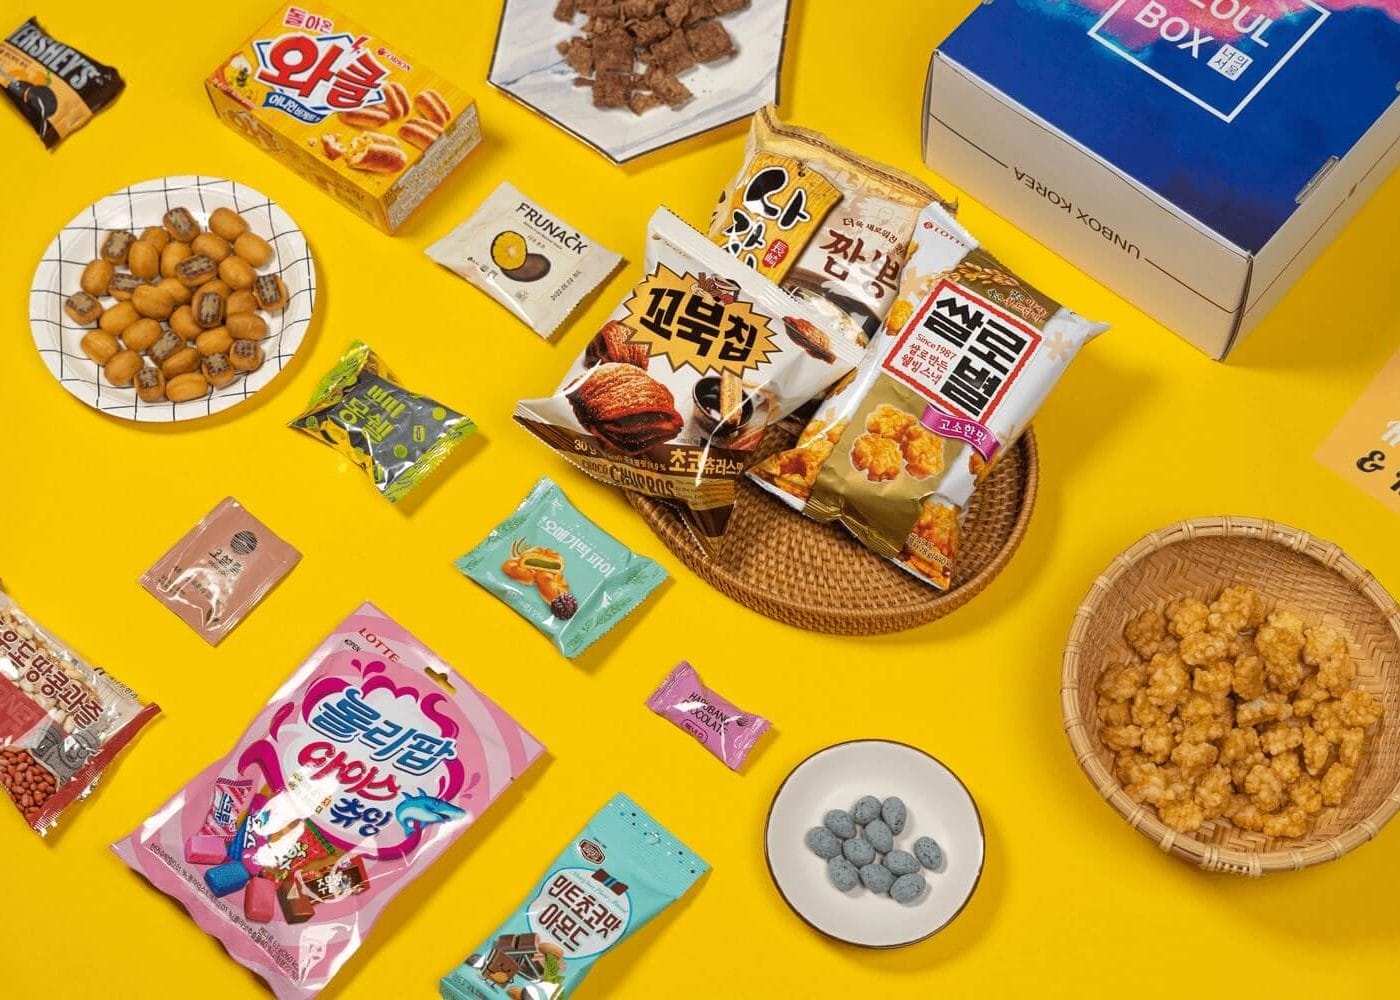  Korean Snack Box Variety Pack - 46 Count Snacks